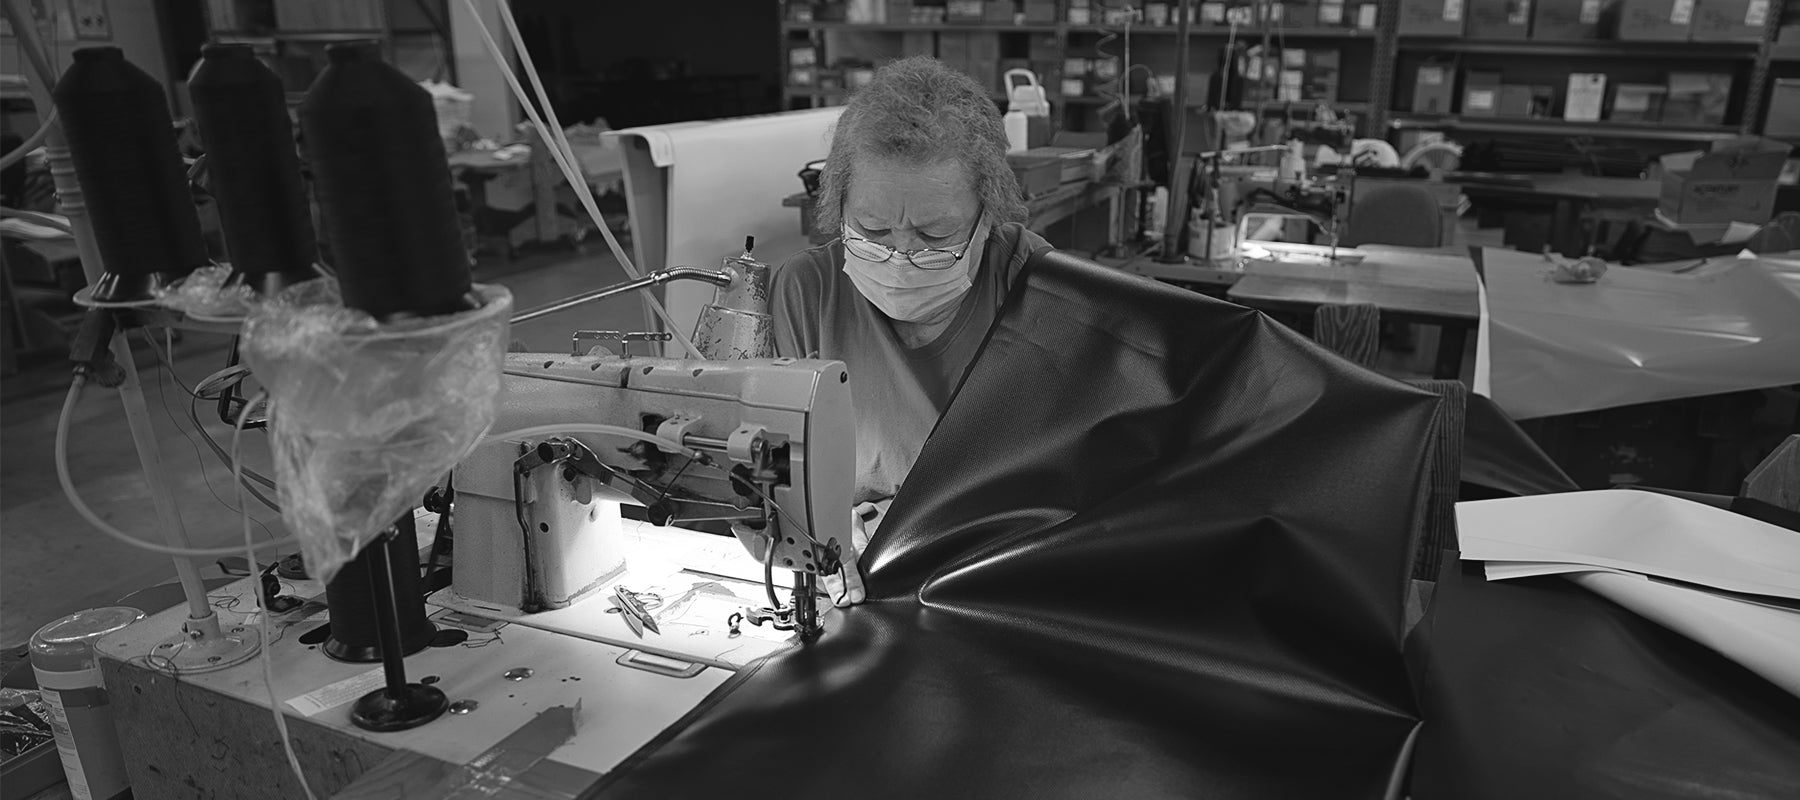 Century worker sewing bags